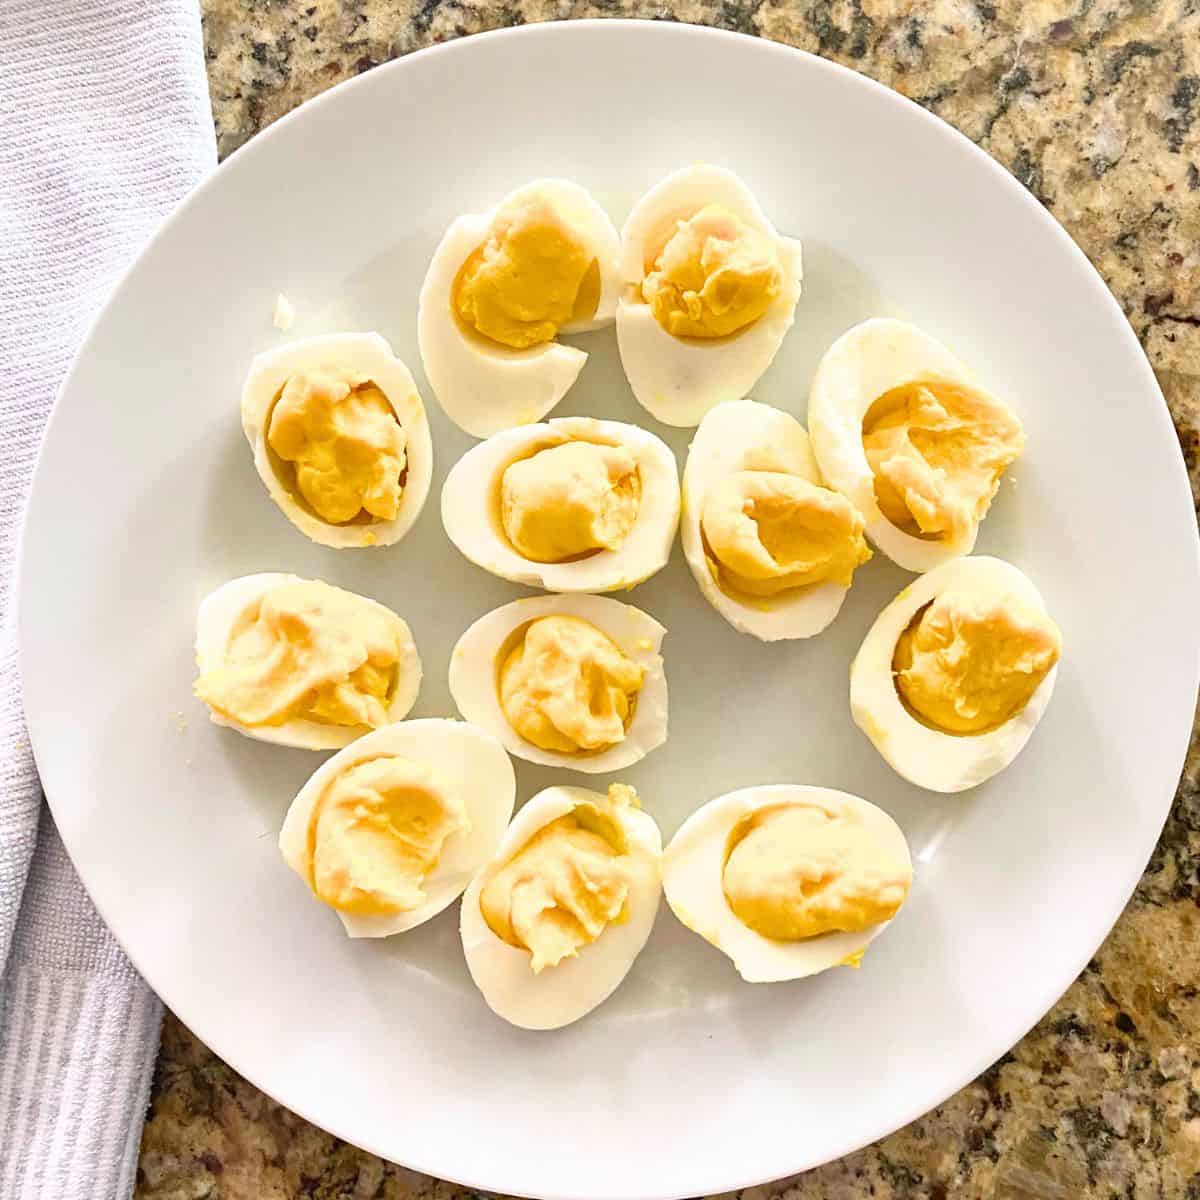 Plain deviled eggs on a white plate